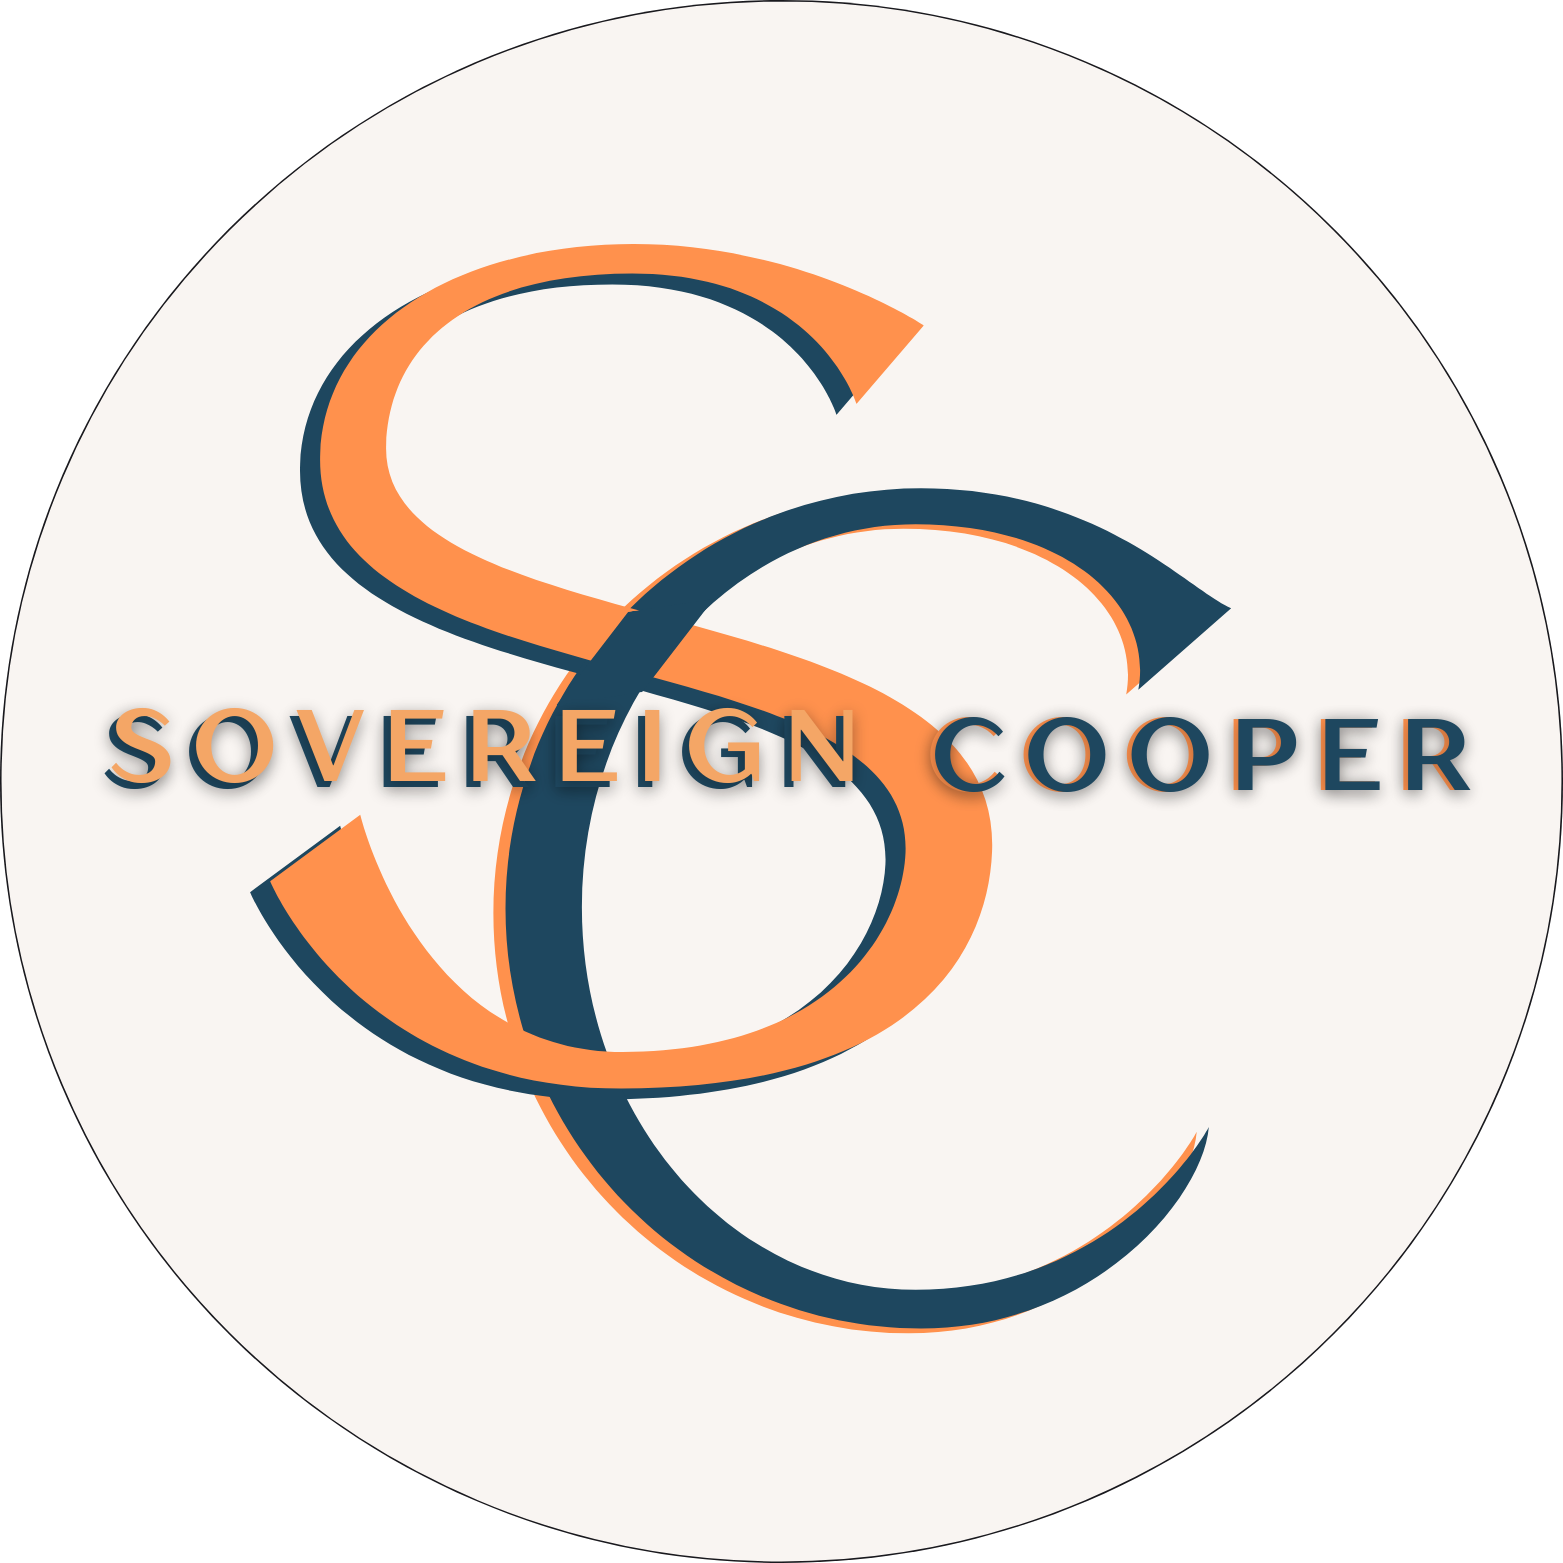 Sovereign Cooper